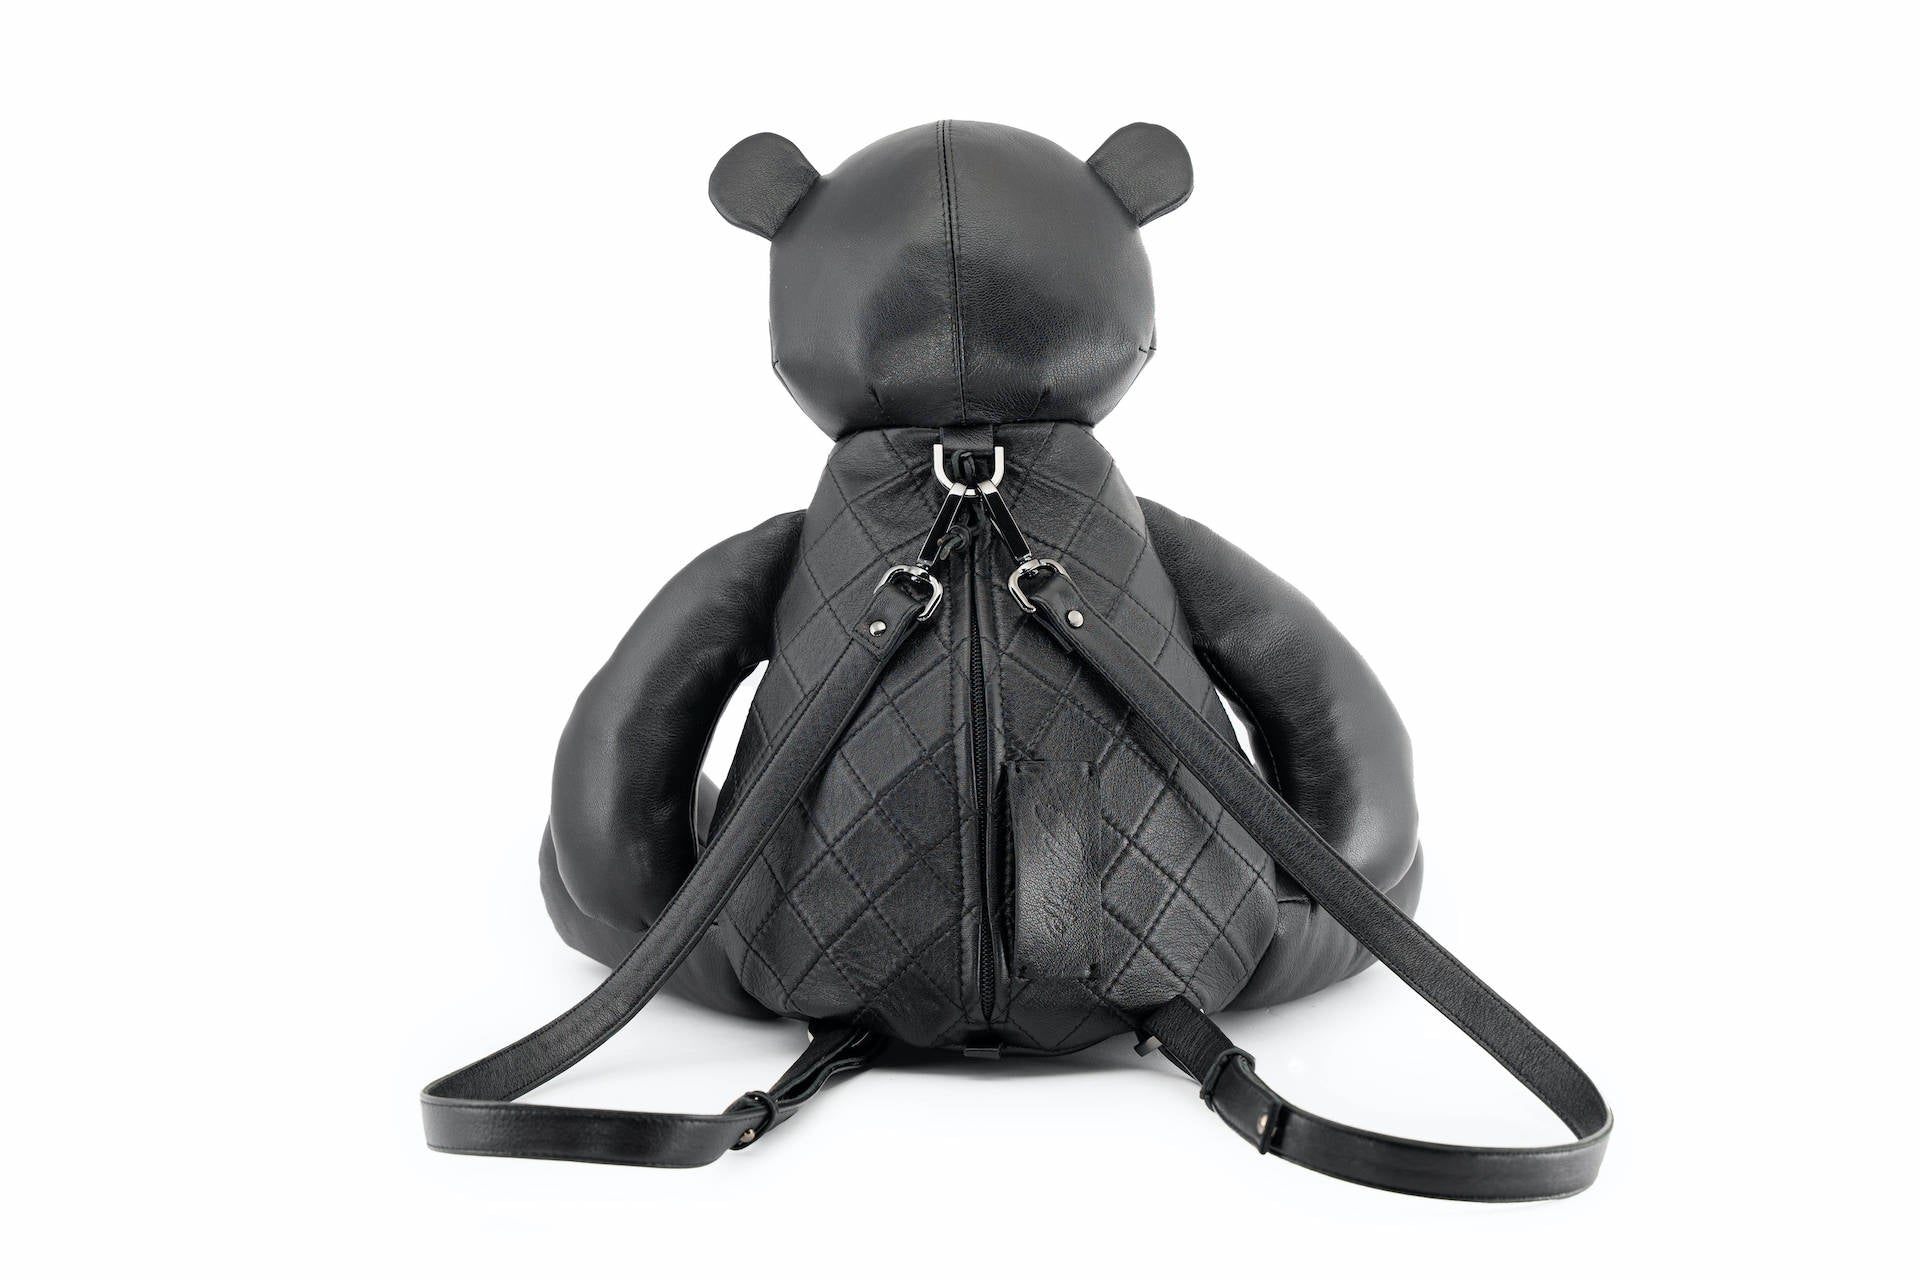 Black Rivtes Zipper Punk Bear Backpack Handbags